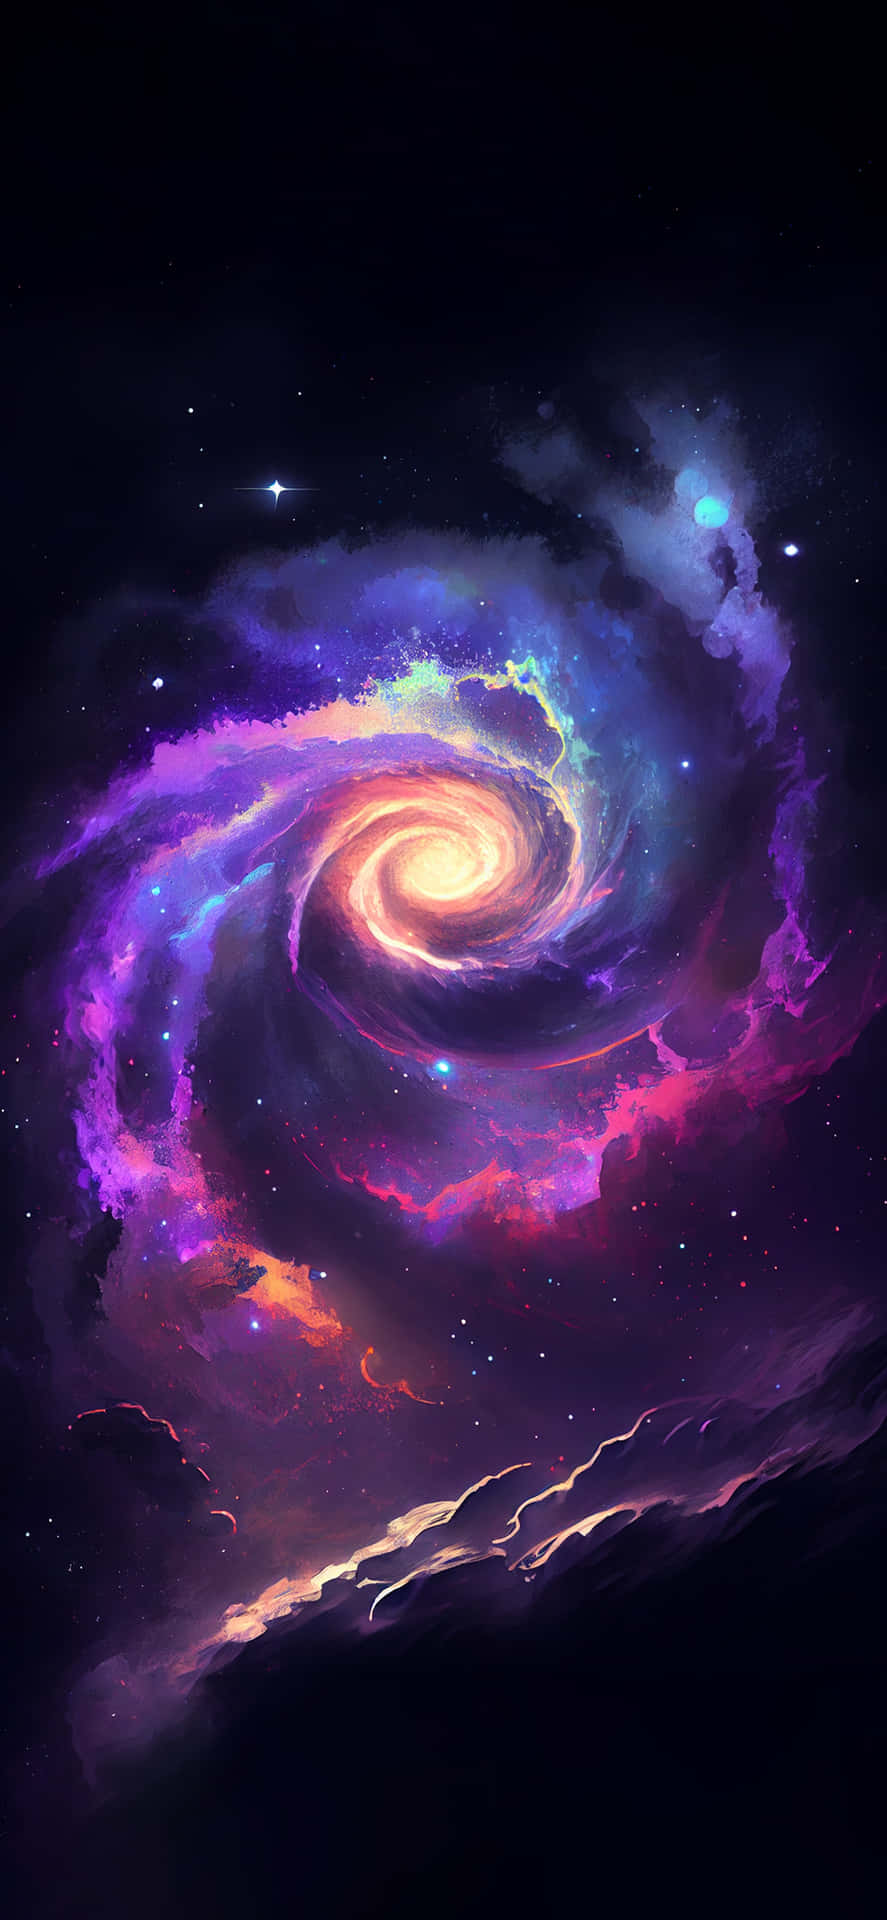 Stunning Galaxy Artwork: A Cosmic Exploration Wallpaper